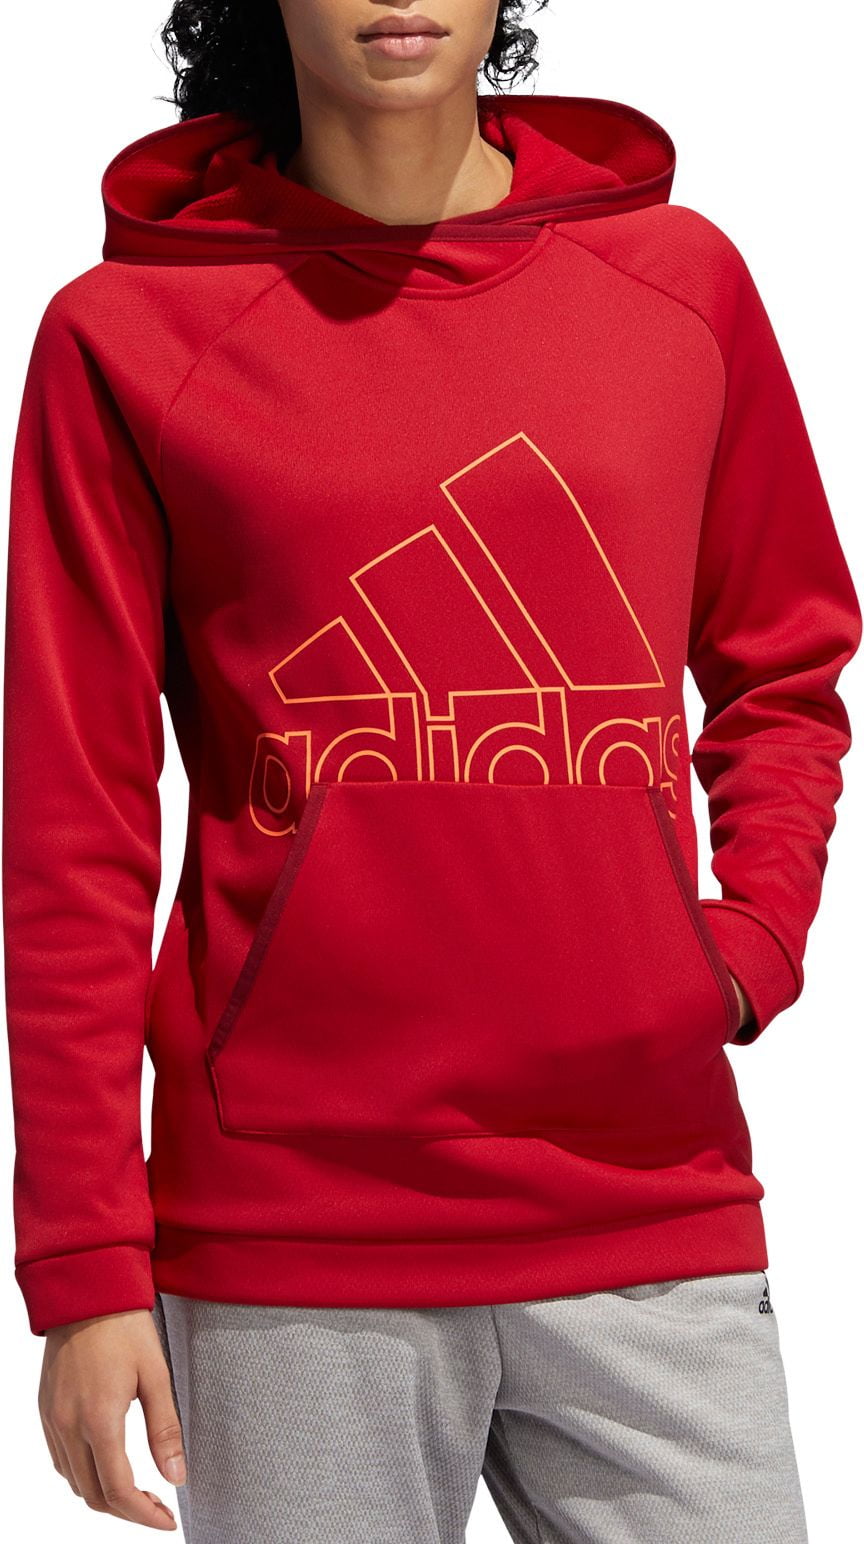 women's adidas team issue badge of sport hoodie